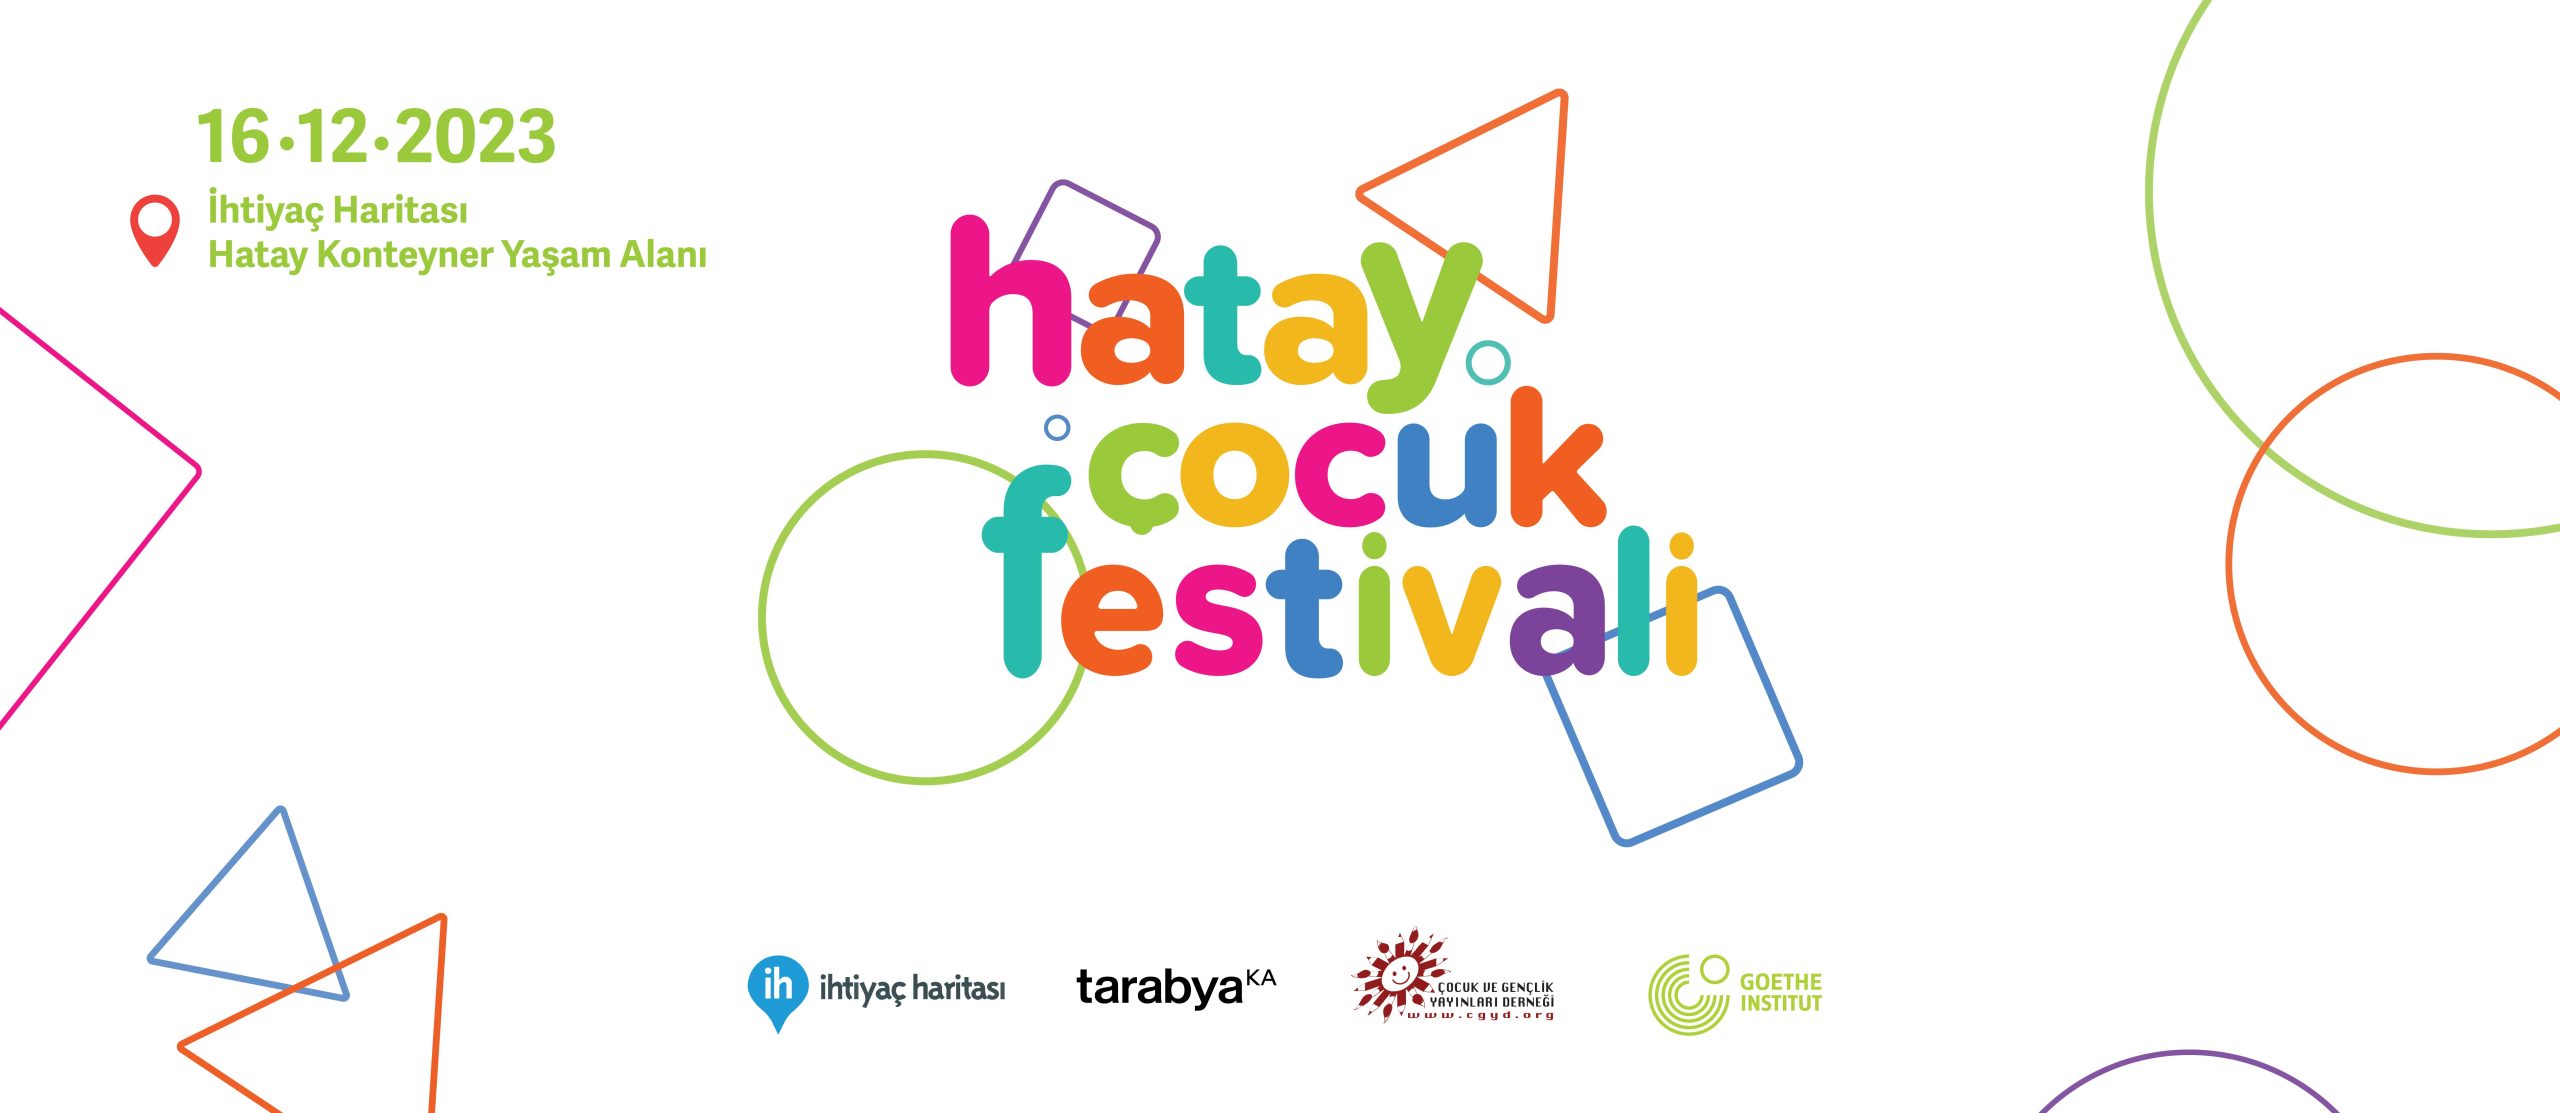 Hatay Cocuk Festivali